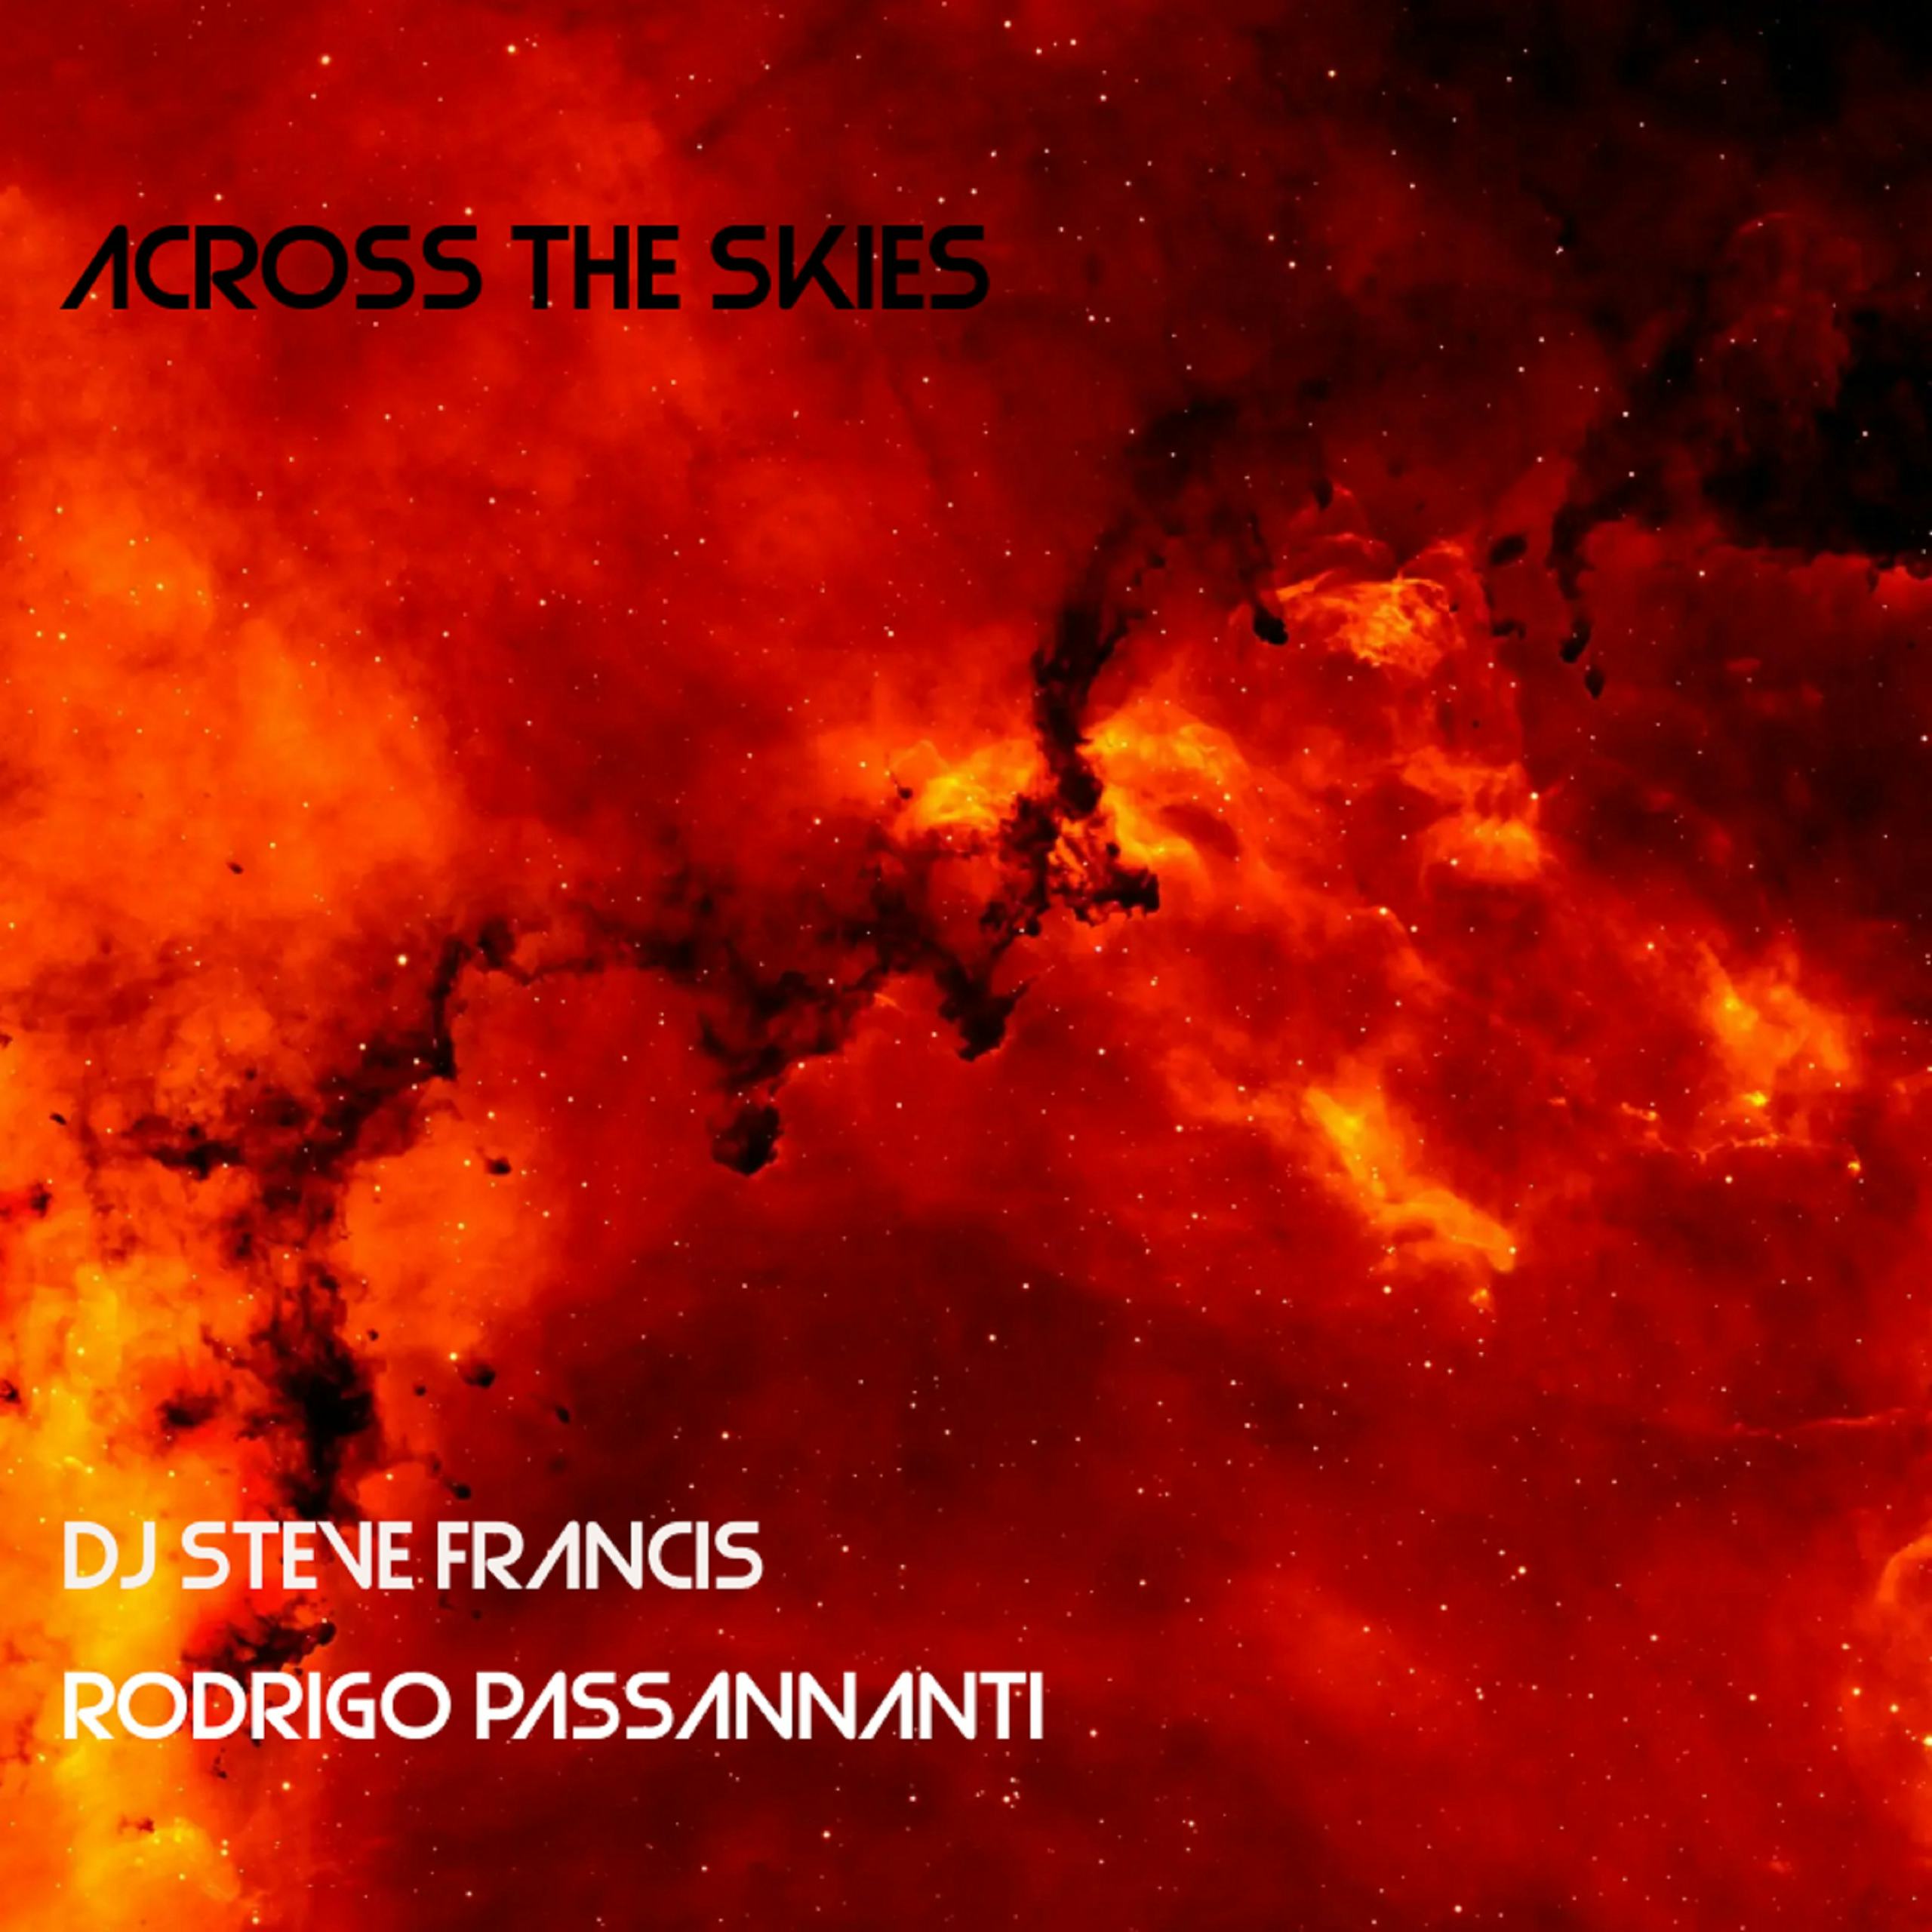 Across the Skies - Rodrigo Passannanti and DJ Steve Francis